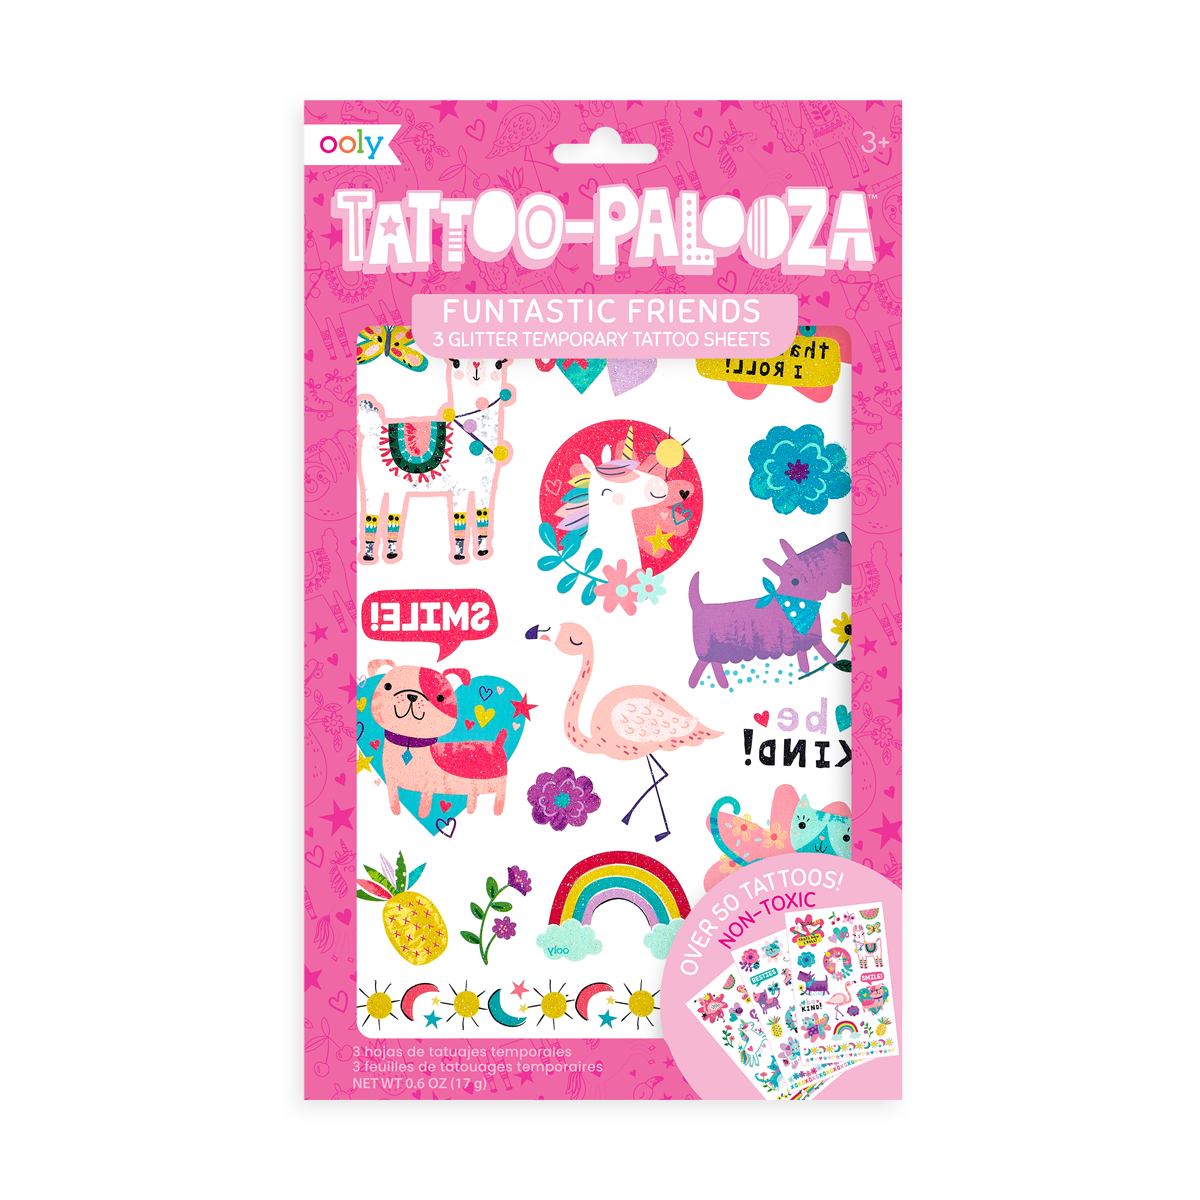 Tattoo-Palooza Temporary Tattoos - Funtastic Friends - in packaging